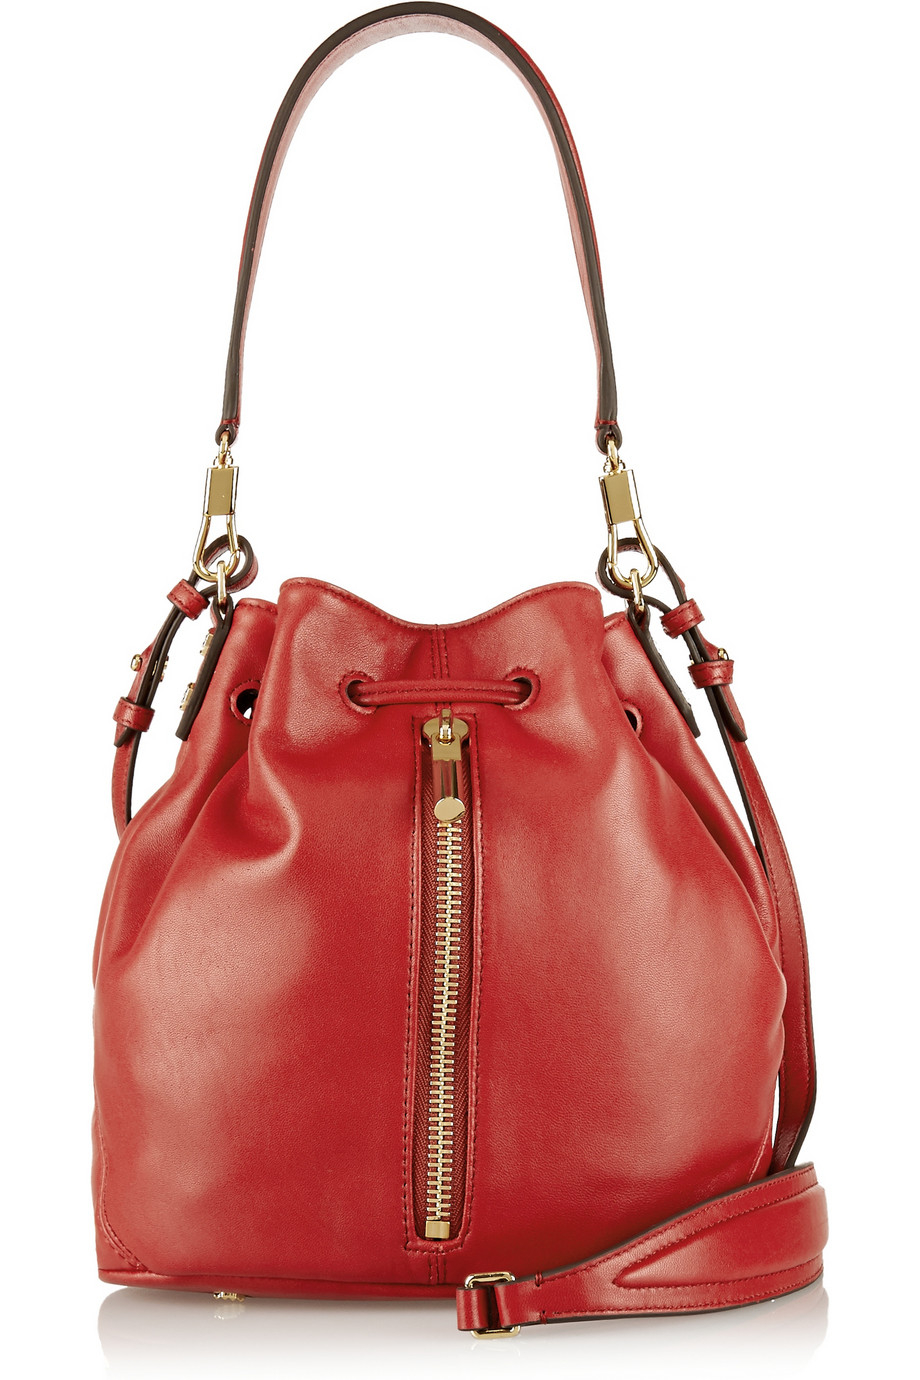 Elizabeth and james Cynnie Mini Leather Shoulder Bag in Red | Lyst